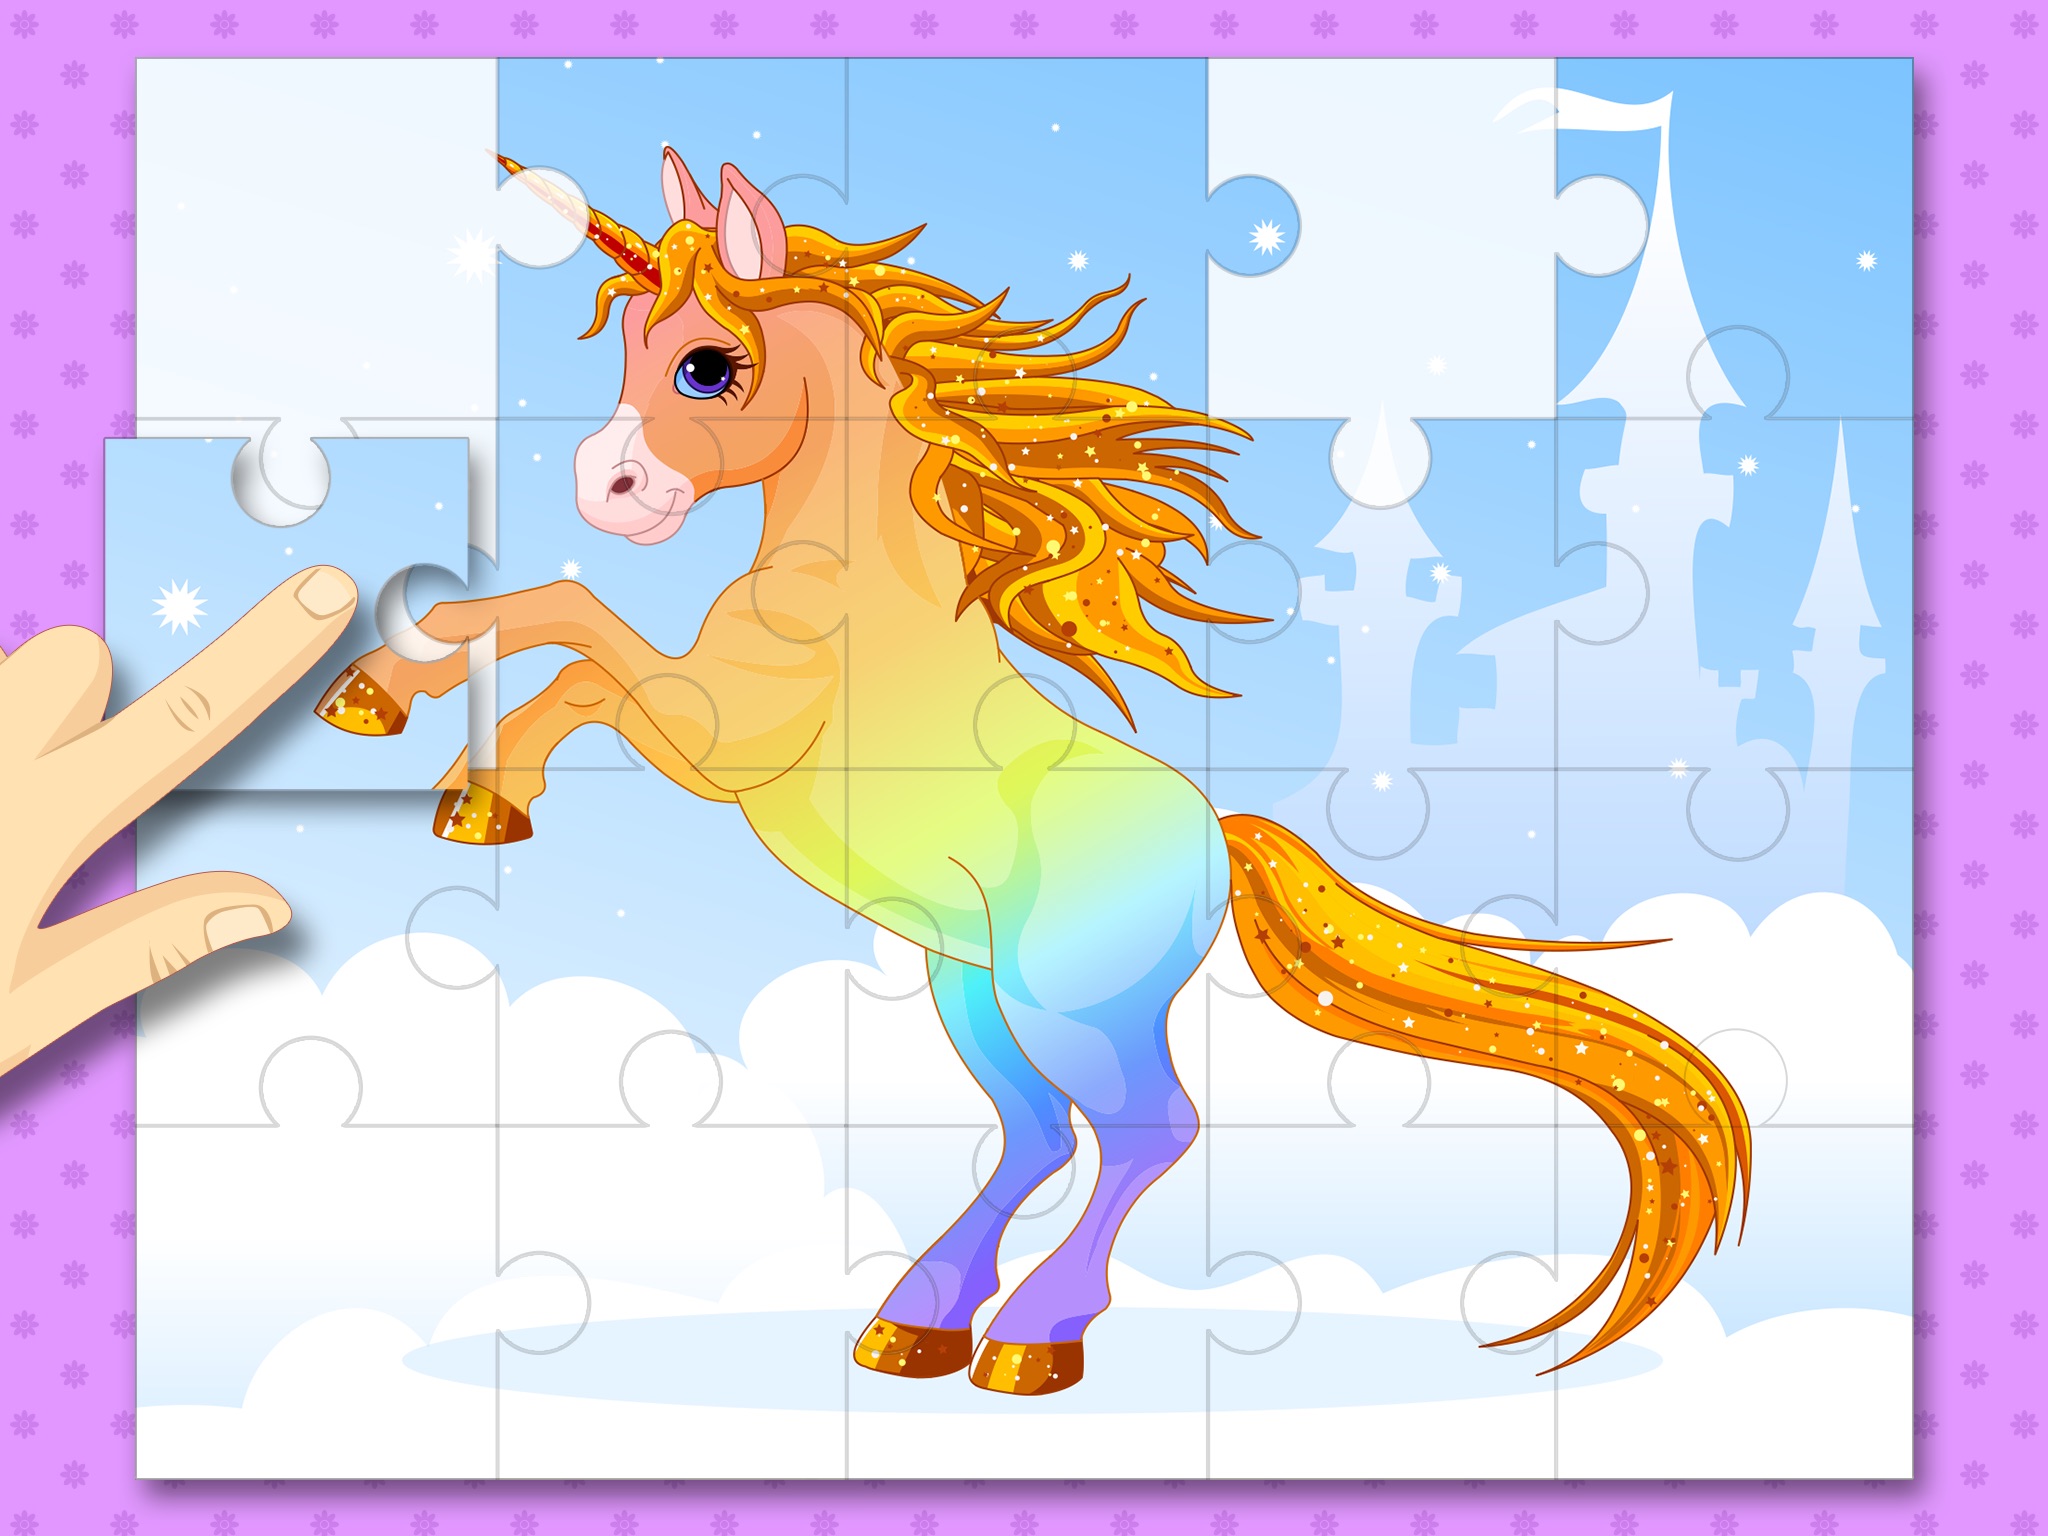 Cute Ponies & Unicorns Jigsaw Puzzles : free logic game for toddlers, preschool kids and little girls screenshot 2